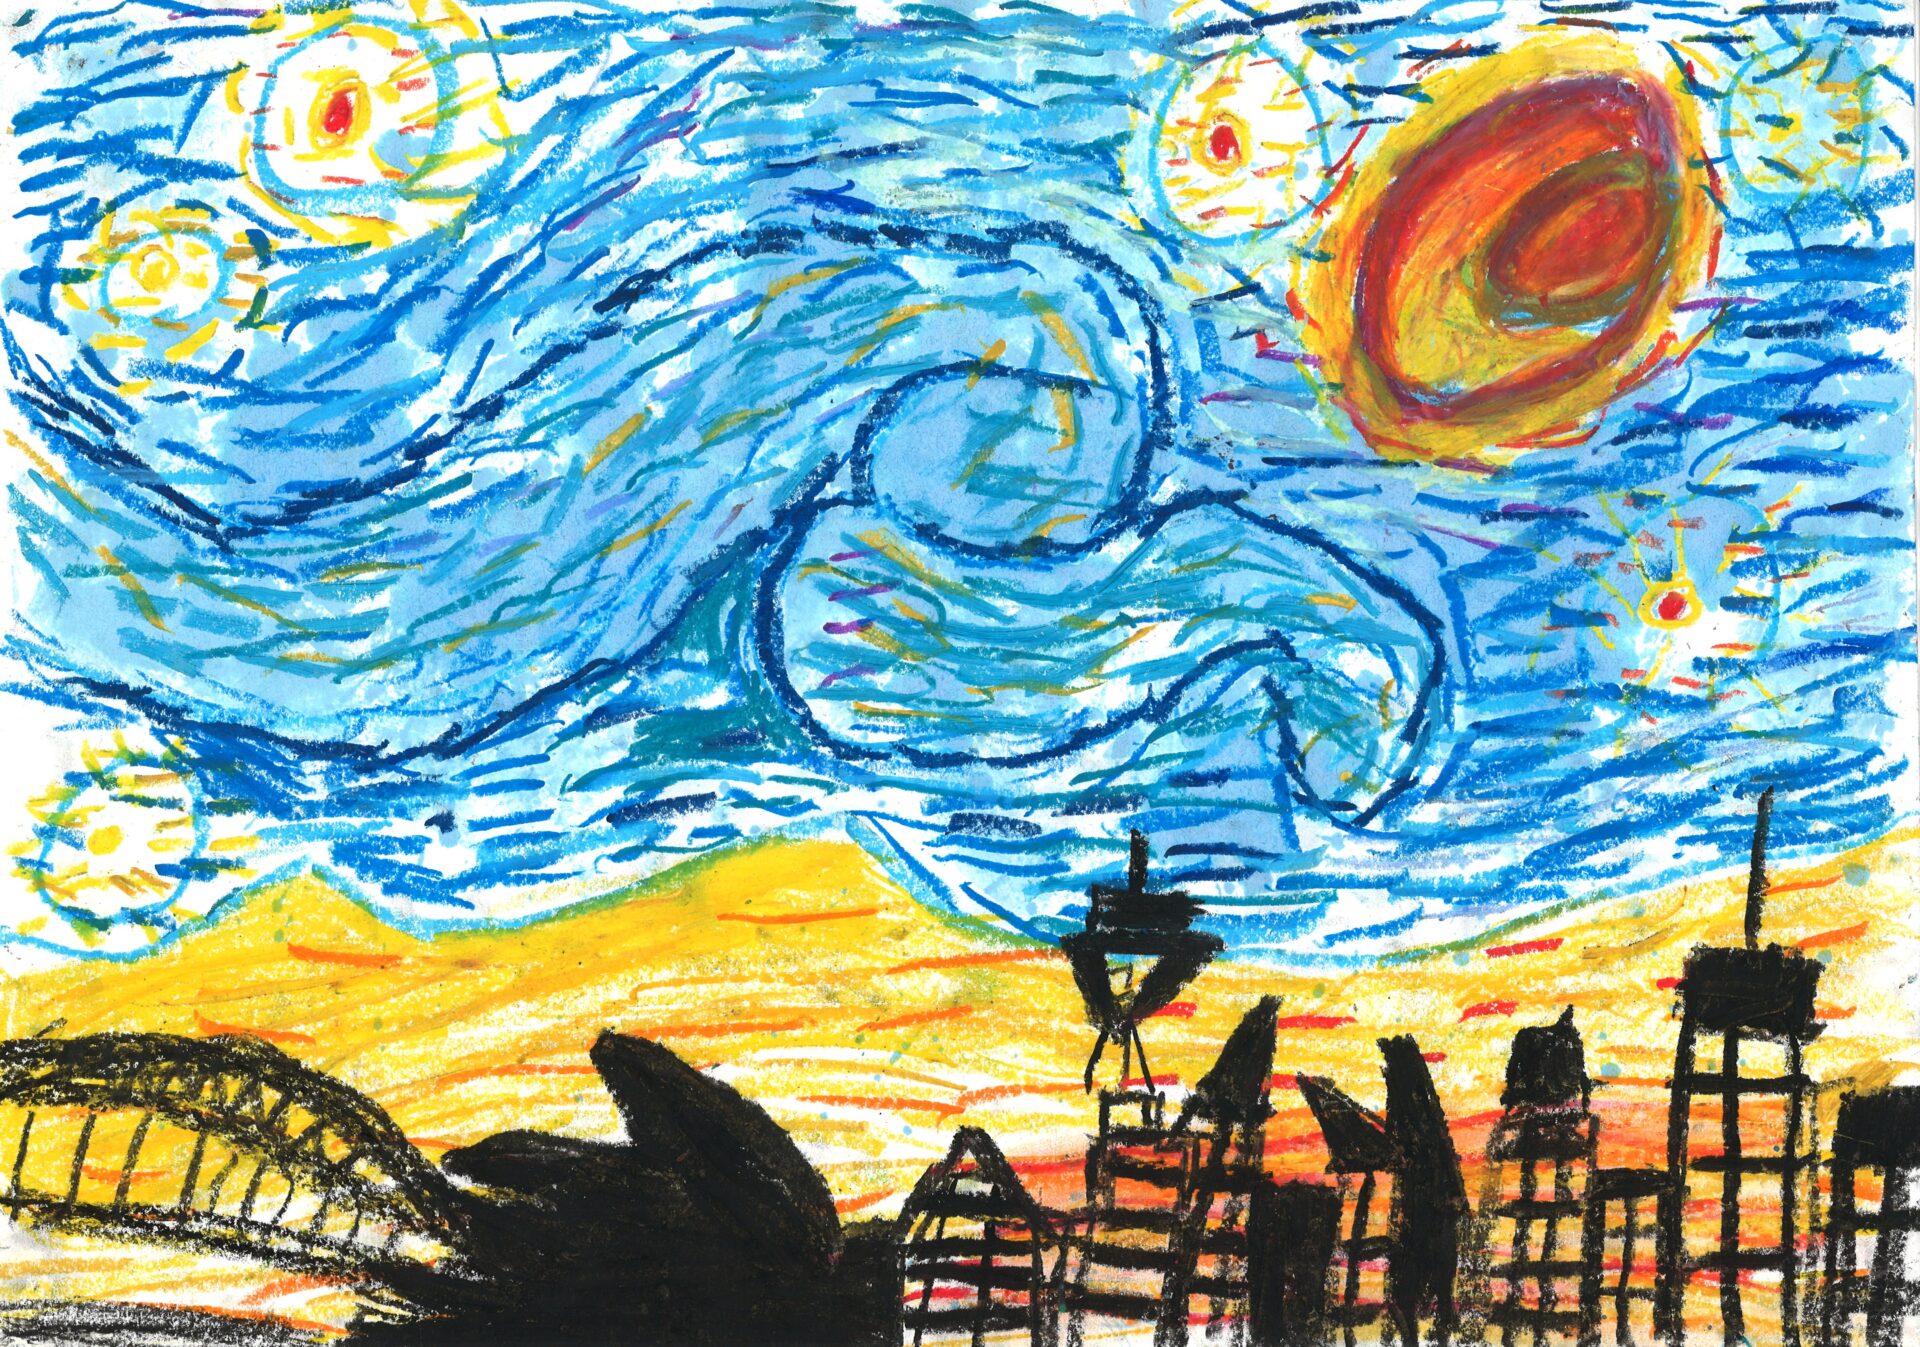 26. Latai 'Ale, 'Starry Night', watercolour and crayon, Year 5, Black Mountain Public School